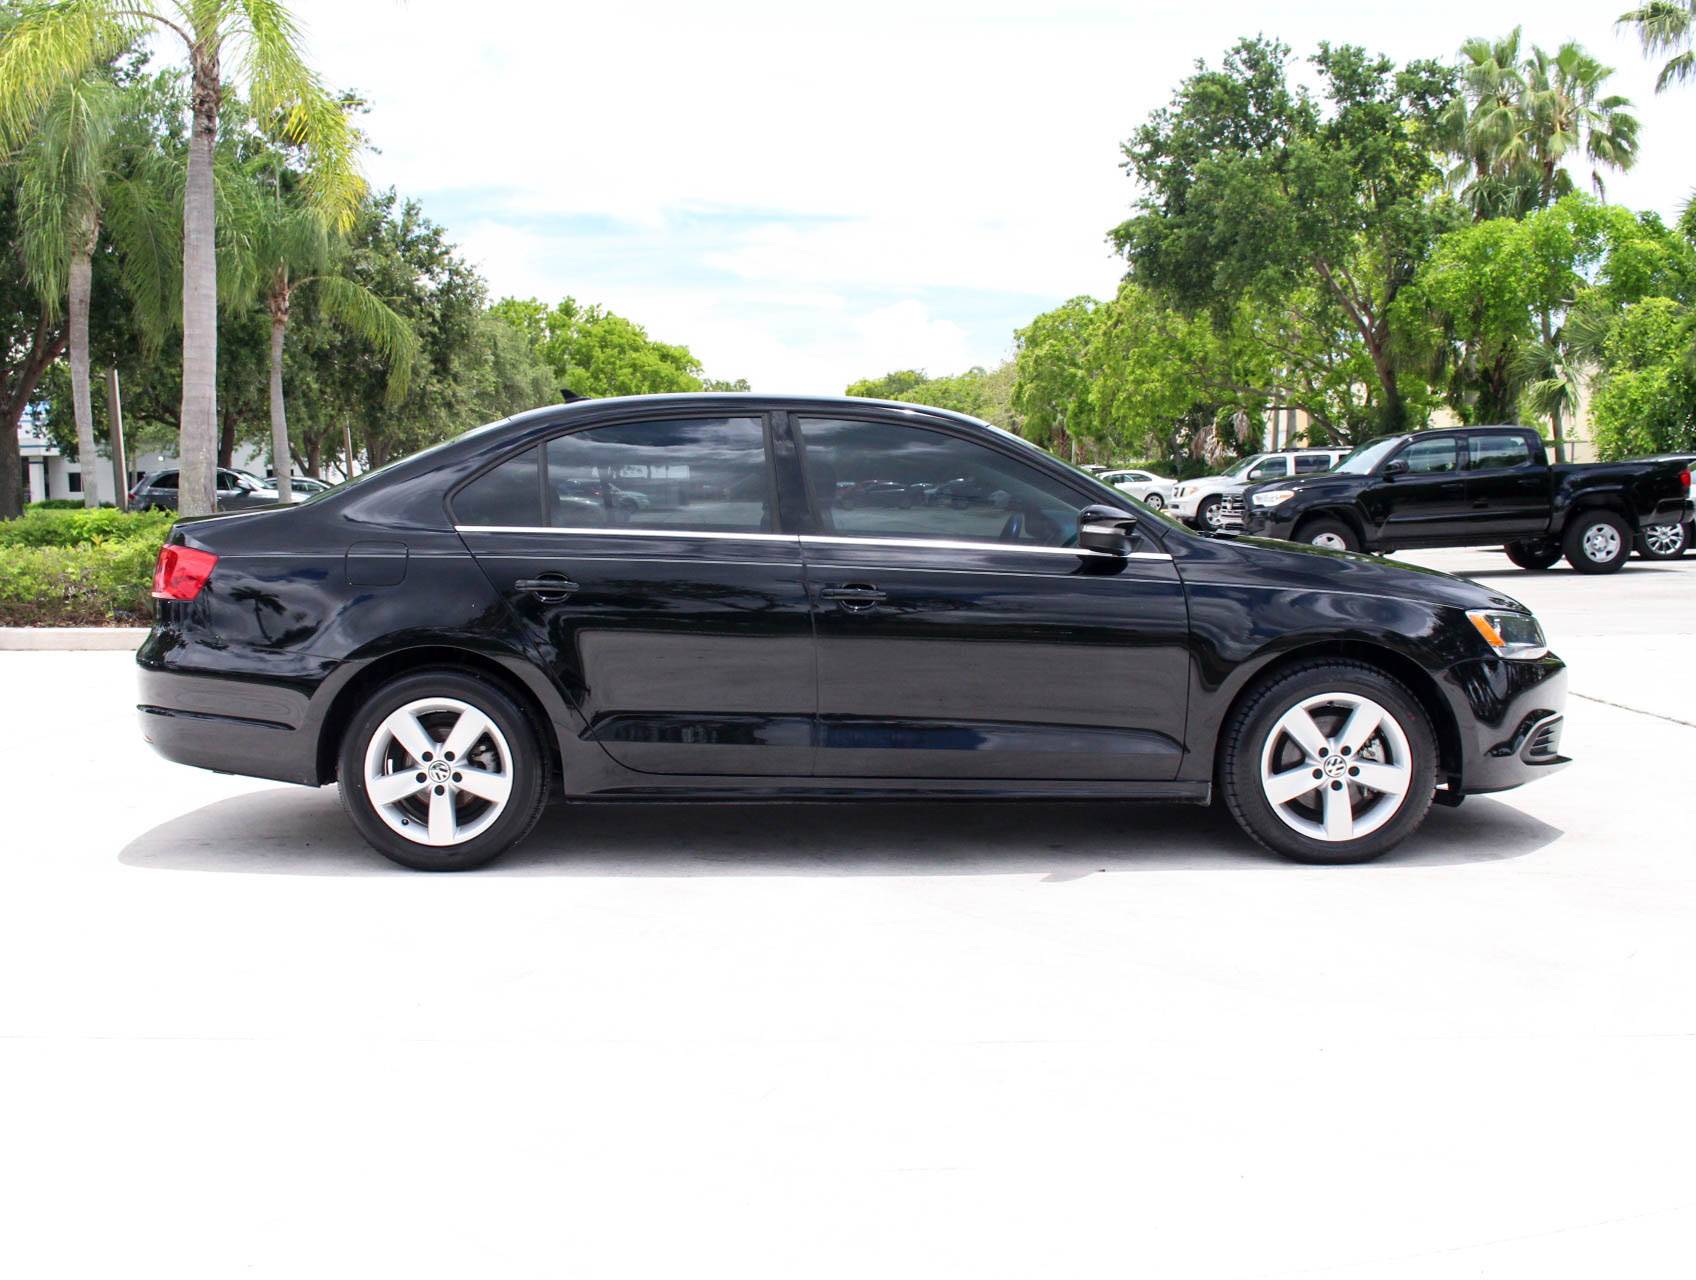 Florida Fine Cars - Used VOLKSWAGEN JETTA 2014 WEST PALM TDI